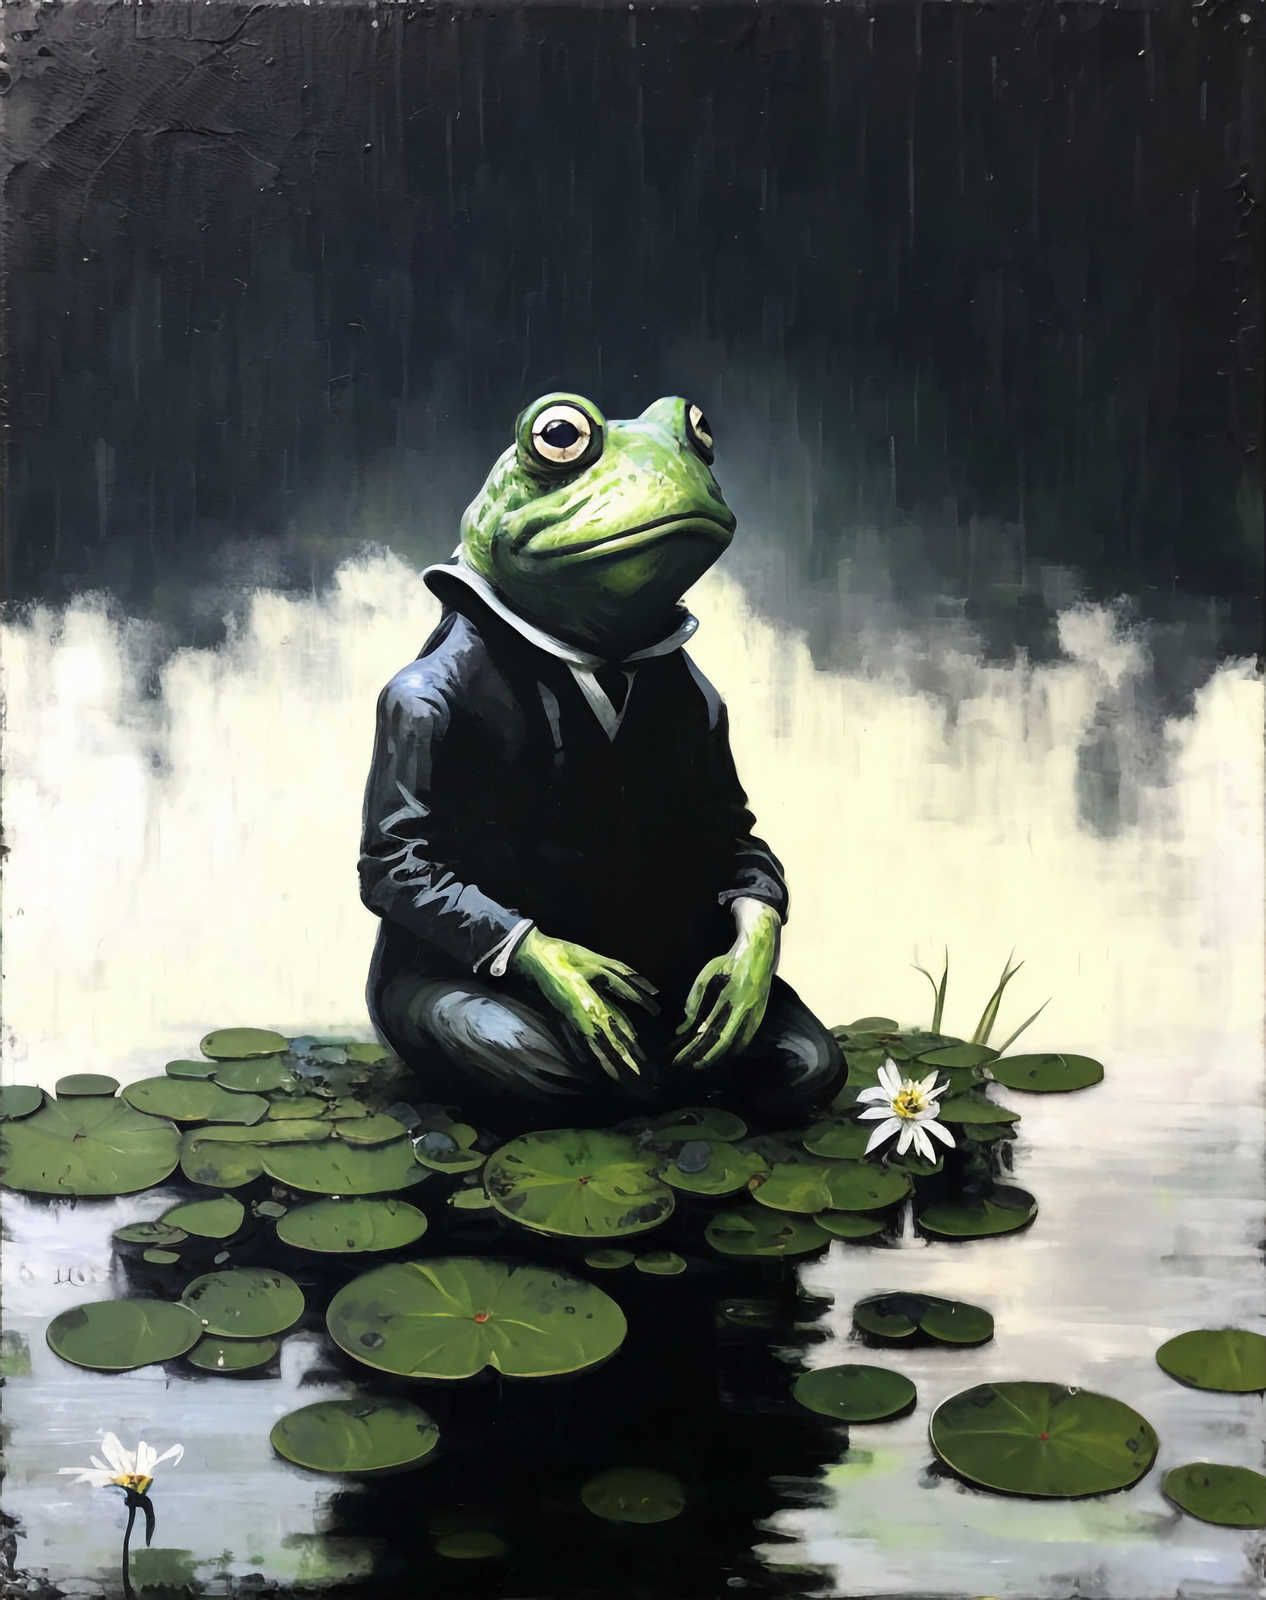             KI Canvas painting »chilling frog« - 80 cm x 120 cm
        